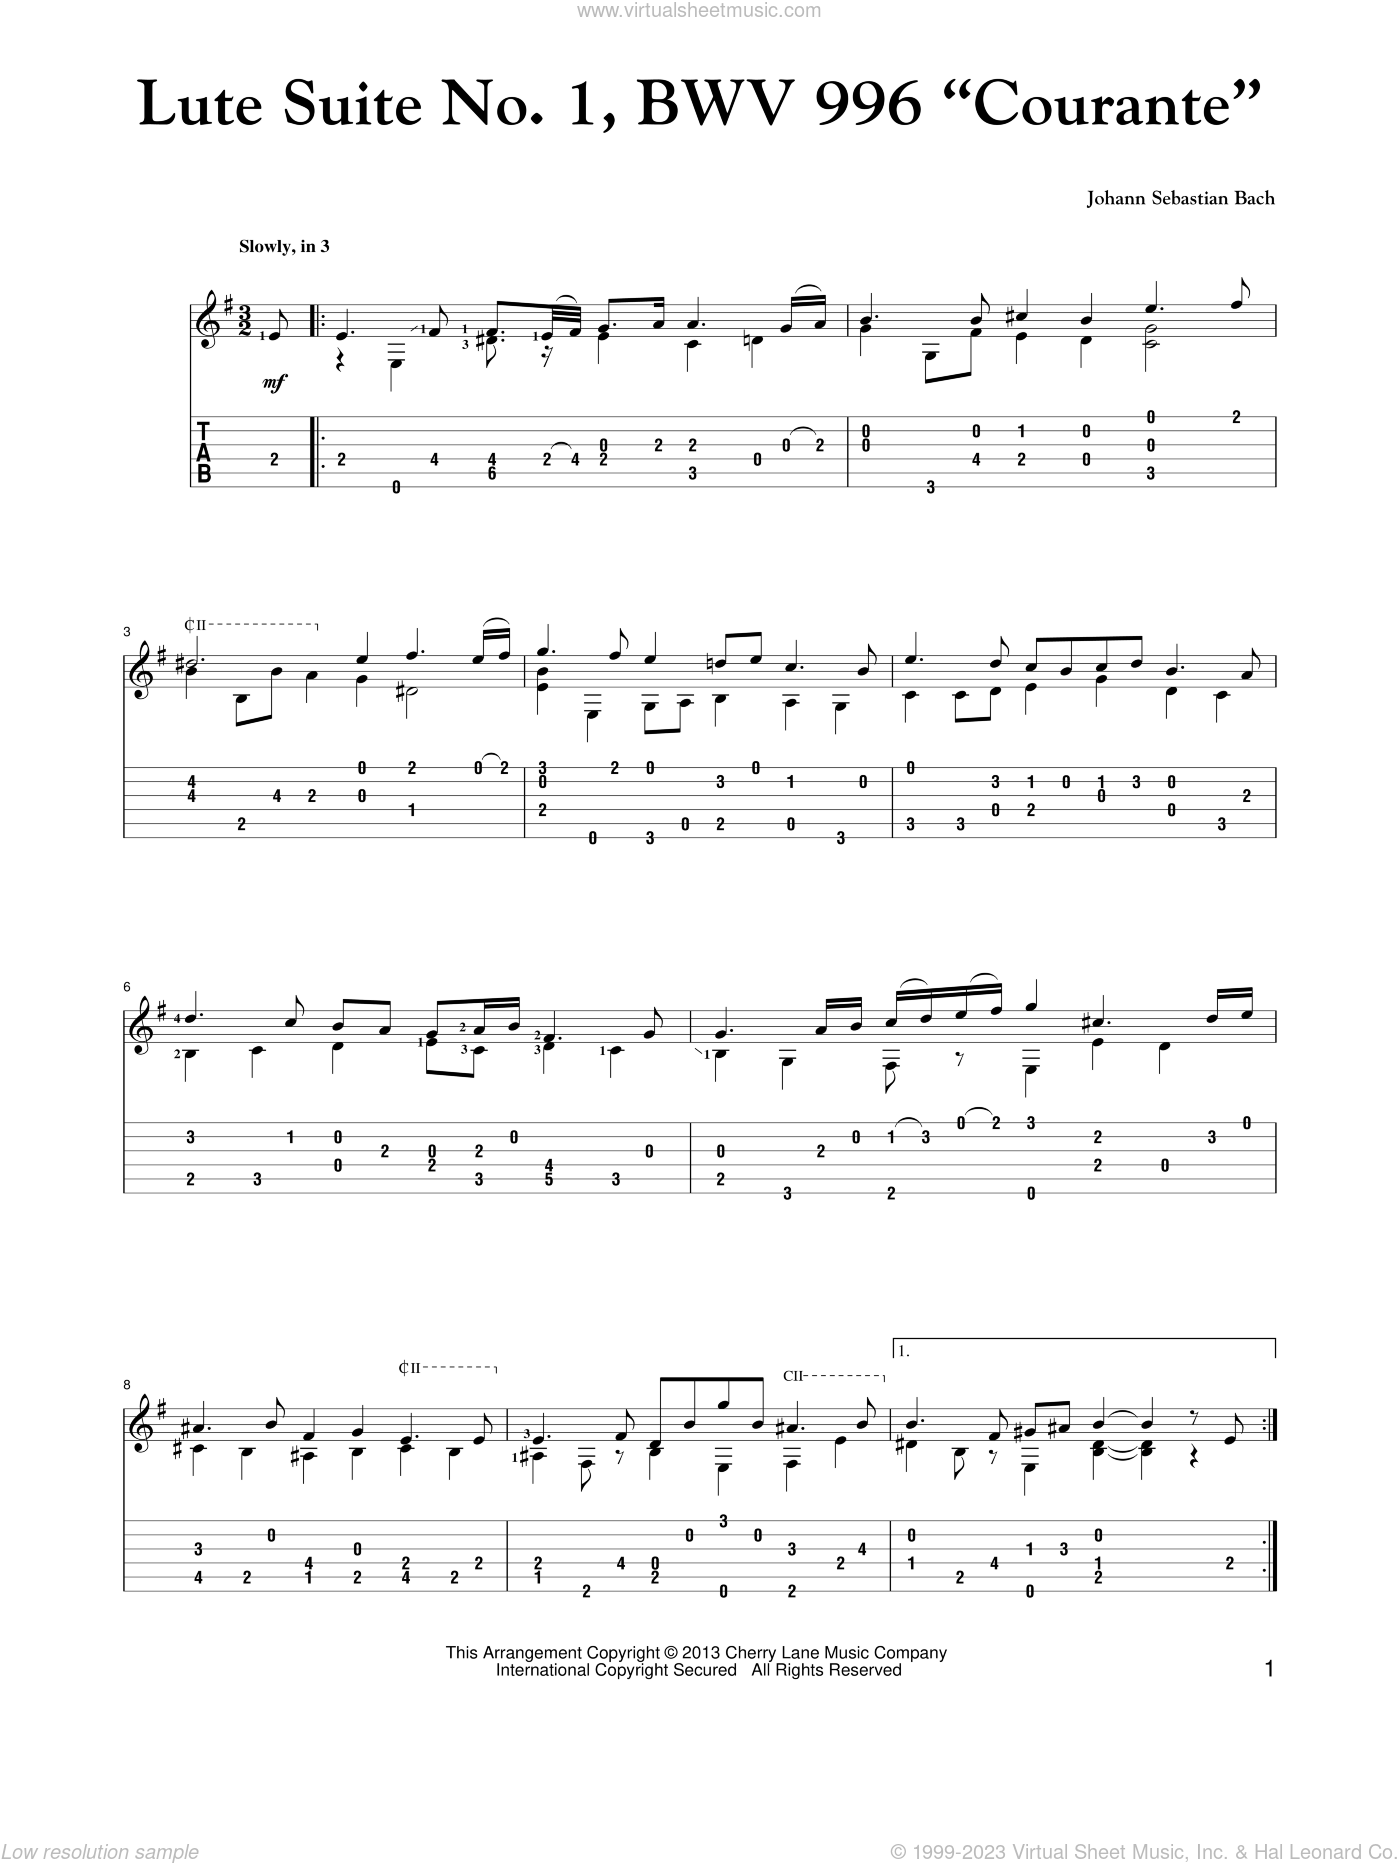 Bourrée in E minor BWV996 - Johann Sebastian Bach — NBN Guitar